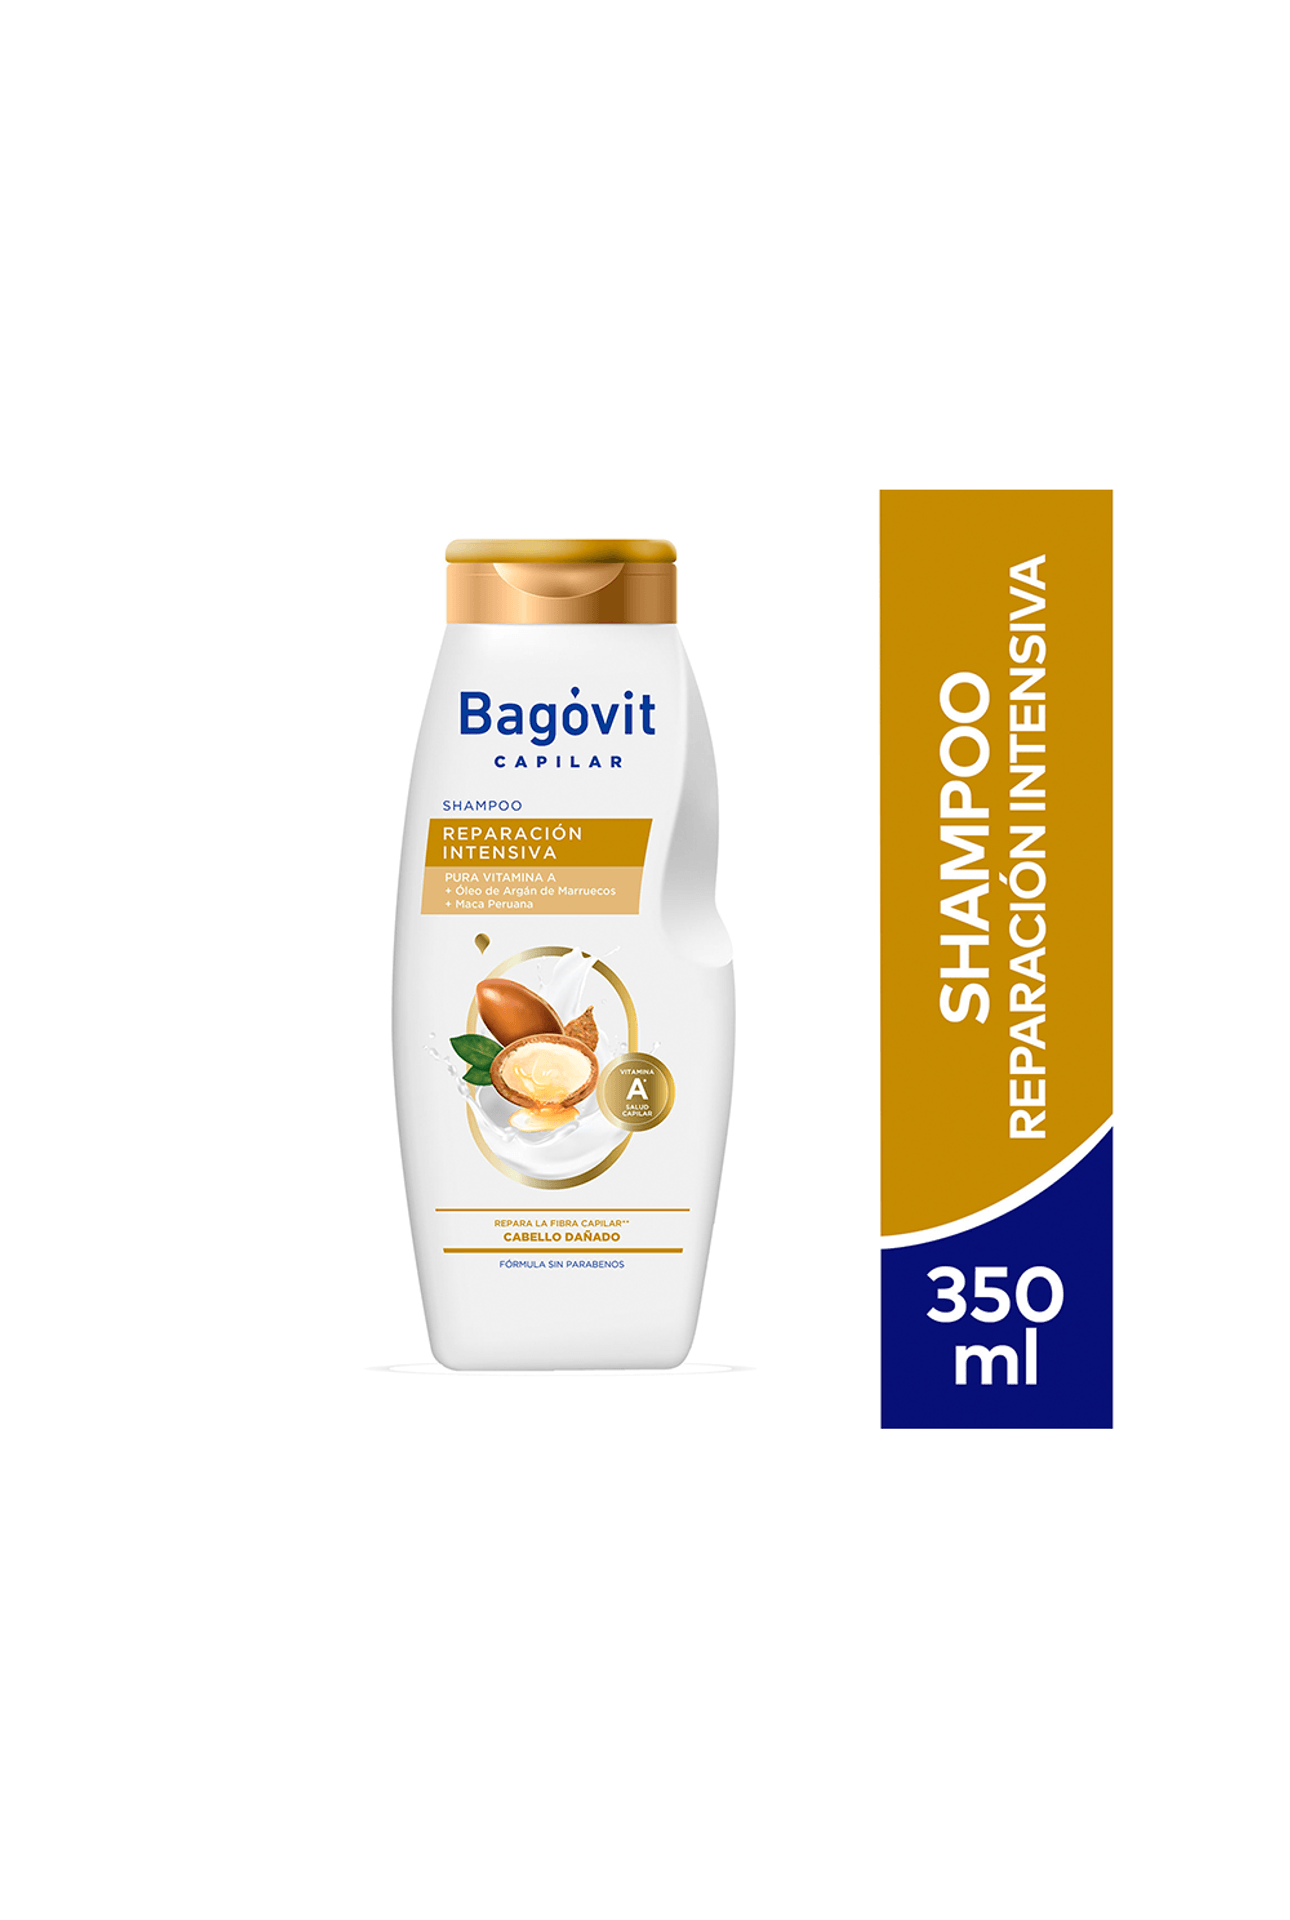 Bagovit-Shampoo-Bagovit-Reparacion-x-350ml-7790375269708_img1